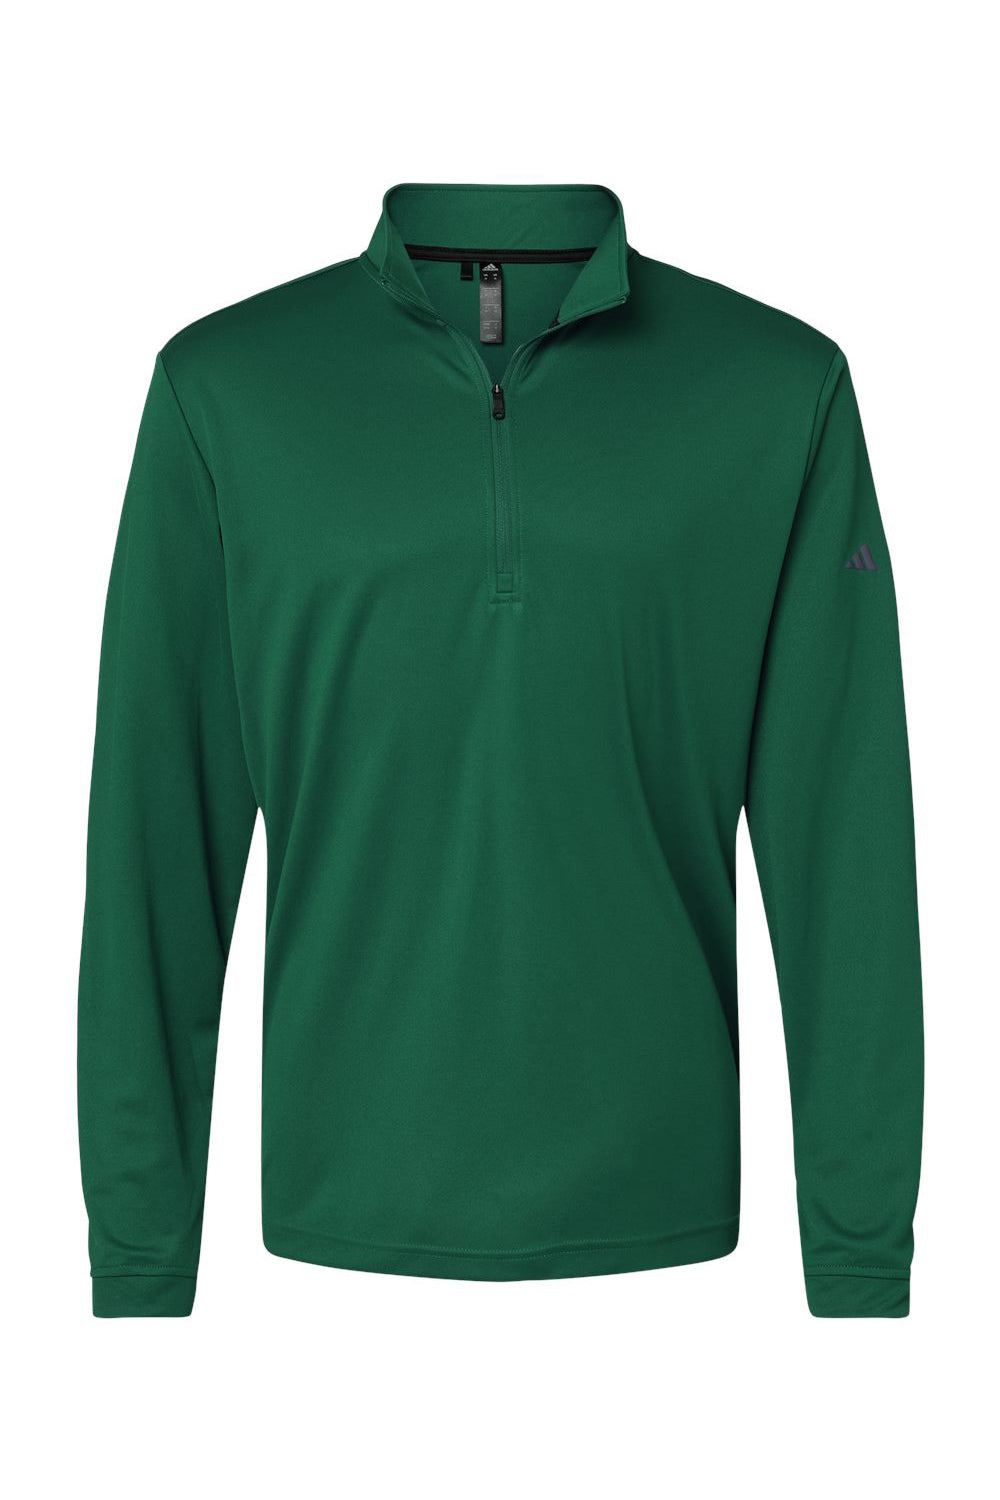 Adidas A401 Mens UPF 50+ 1/4 Zip Sweatshirt Collegiate Green Flat Front